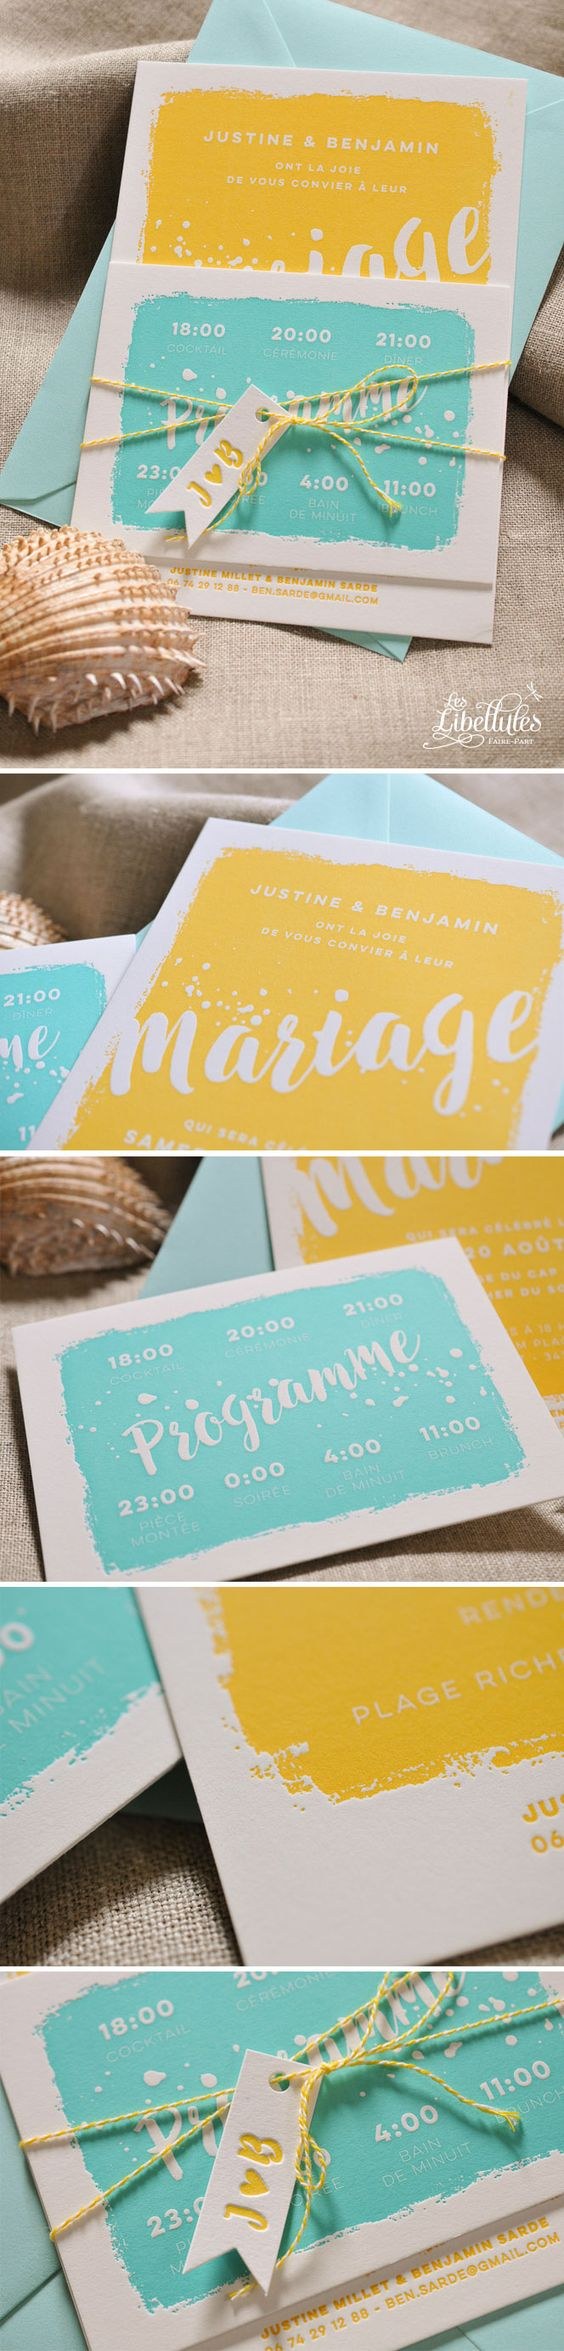 mint and yellow wedding invitations